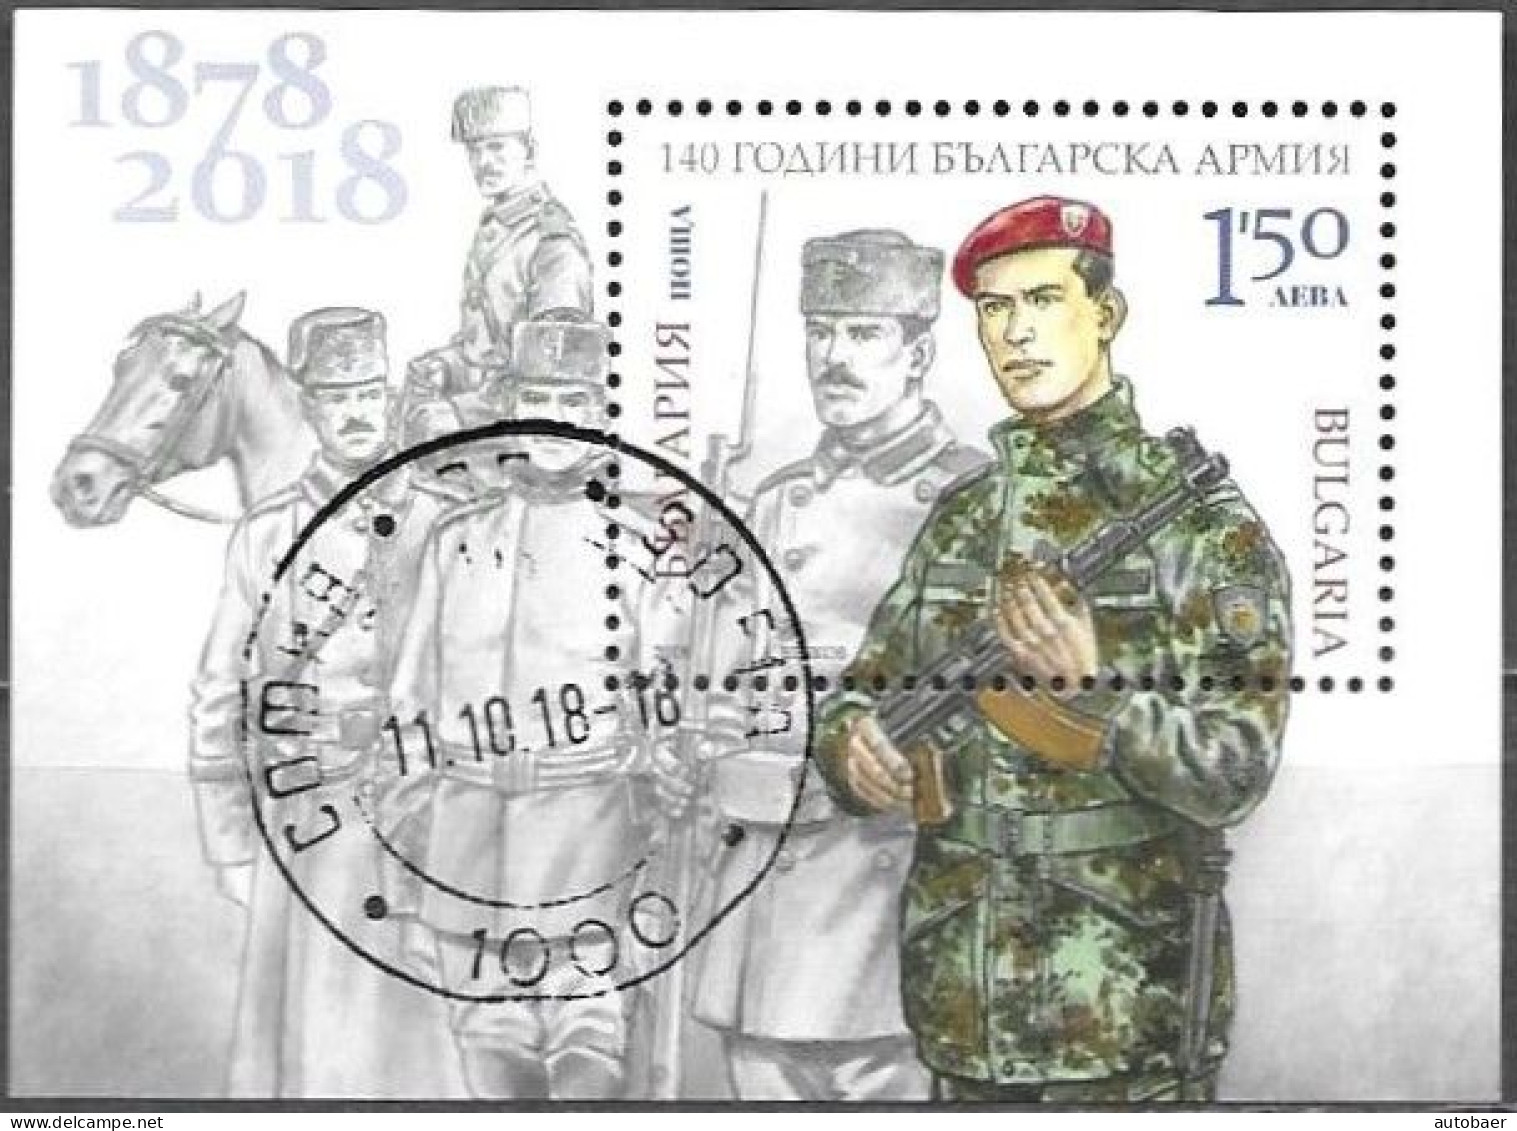 Bulgaria Bulgarie Bulgarien 2018 140 Years Bulgarian Army Michel Bl. 456 (5372) Used Obliteré Gest. Oo Cancelled - Blocs-feuillets